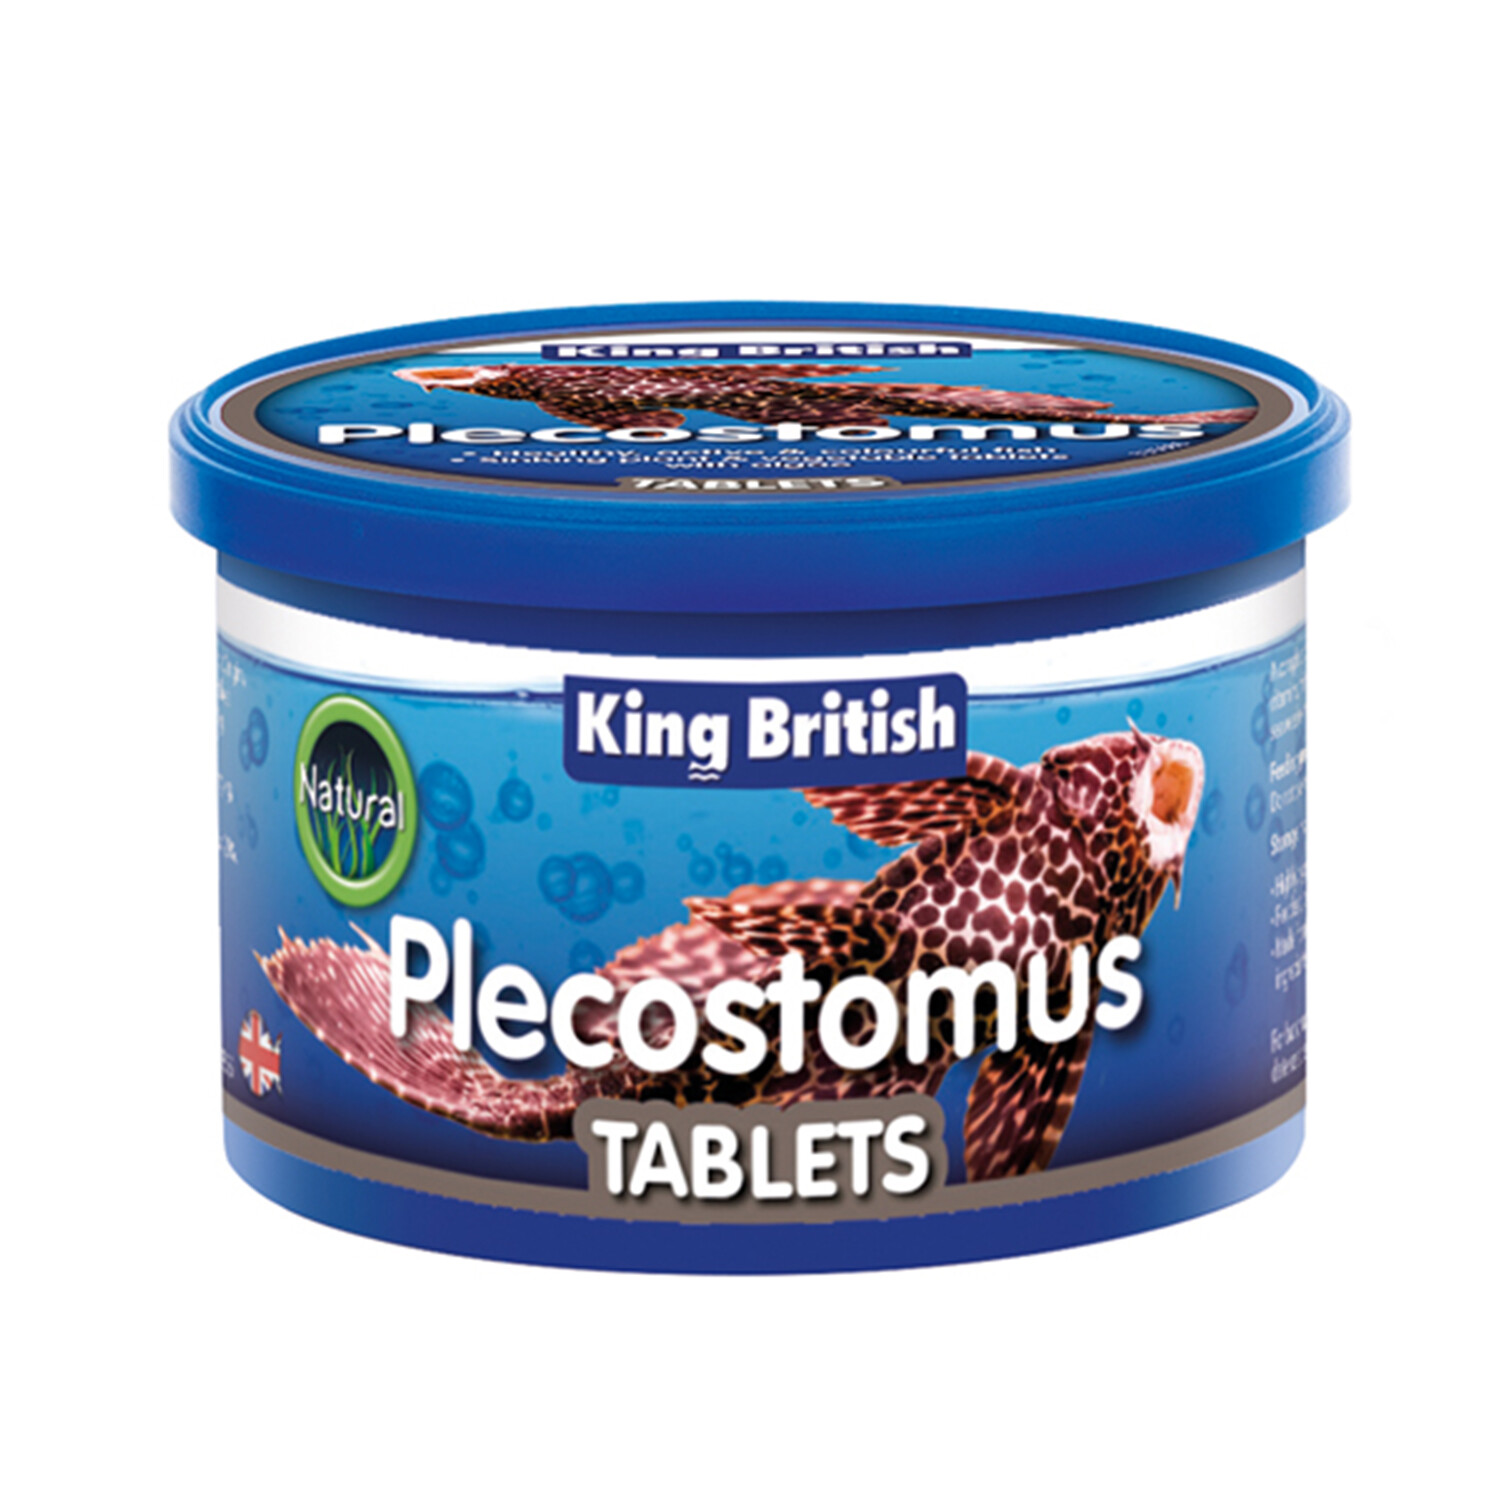 King British Plecostomus Tablets Image